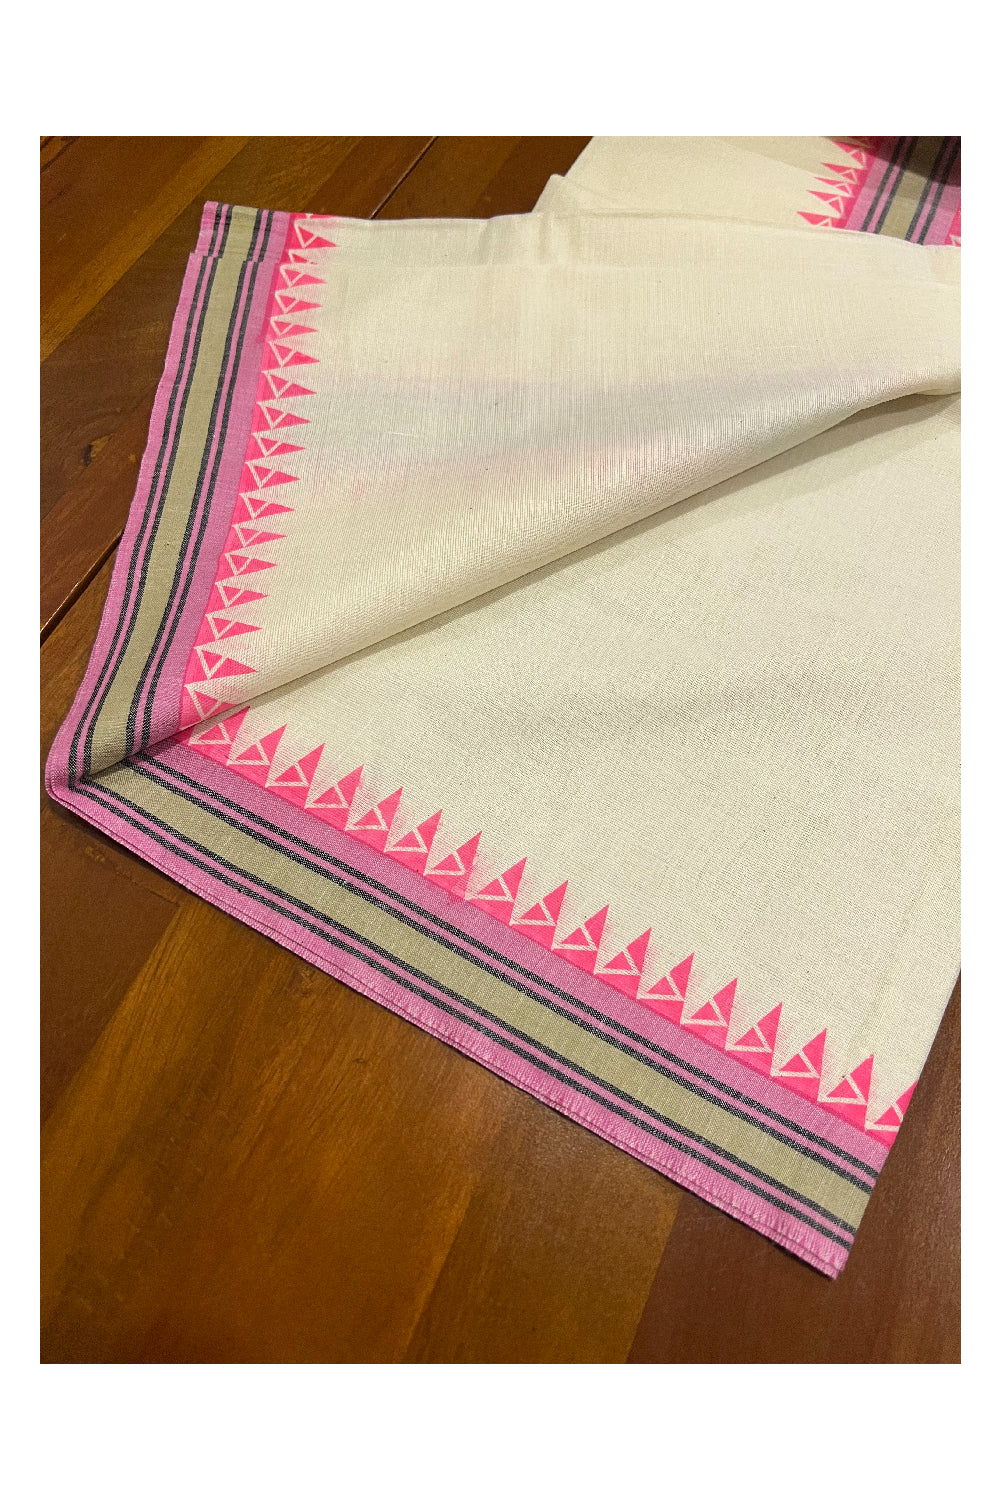 Kerala Cotton Mulloth Mundum Neriyathum Single (Set Mundu) with Pink Temple Block Prints on Green and Pink Border (Extra Soft Cotton)